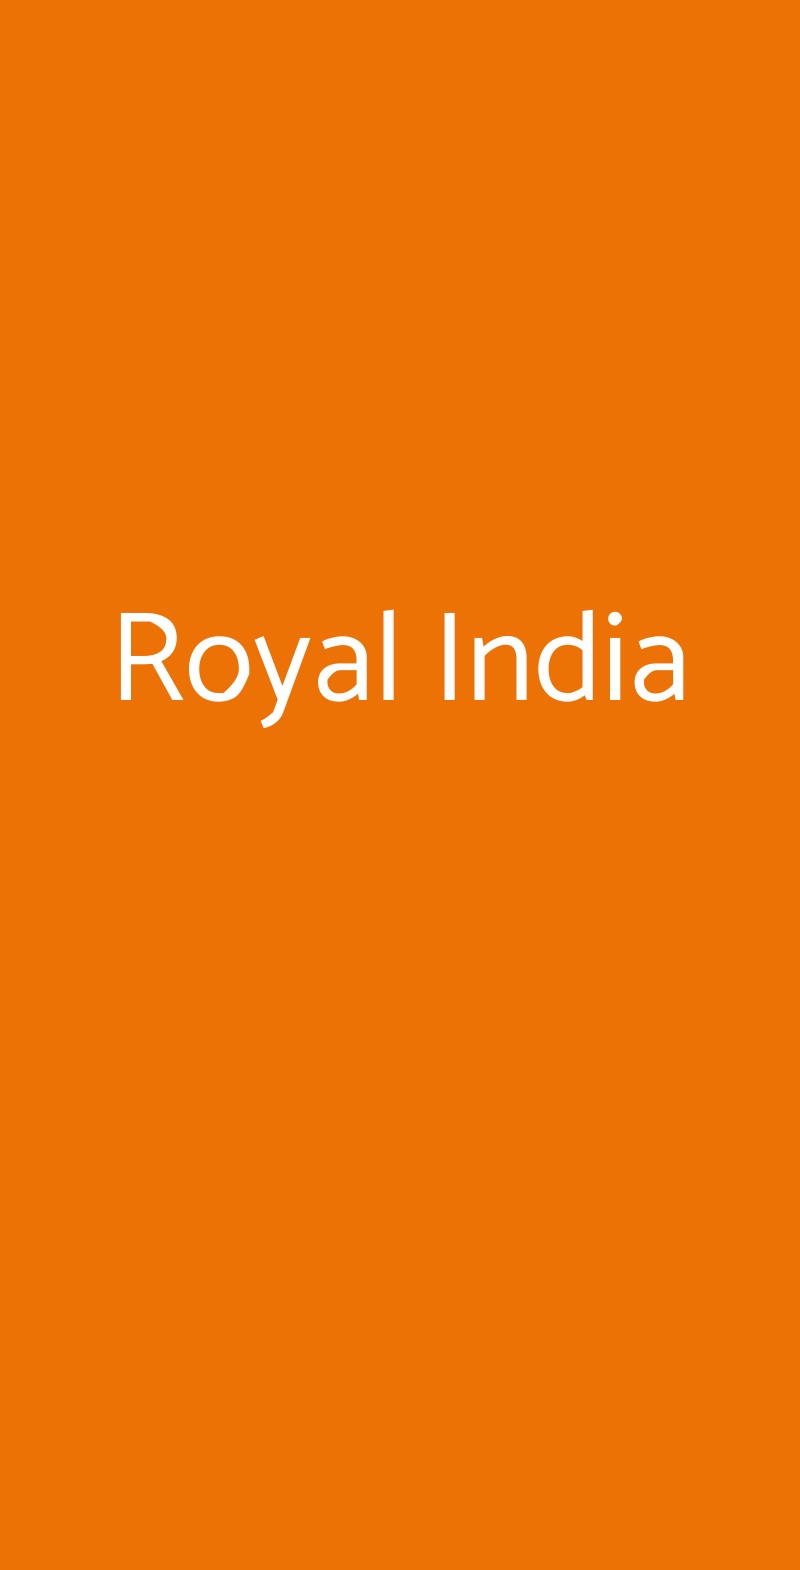 Royal India Firenze menù 1 pagina